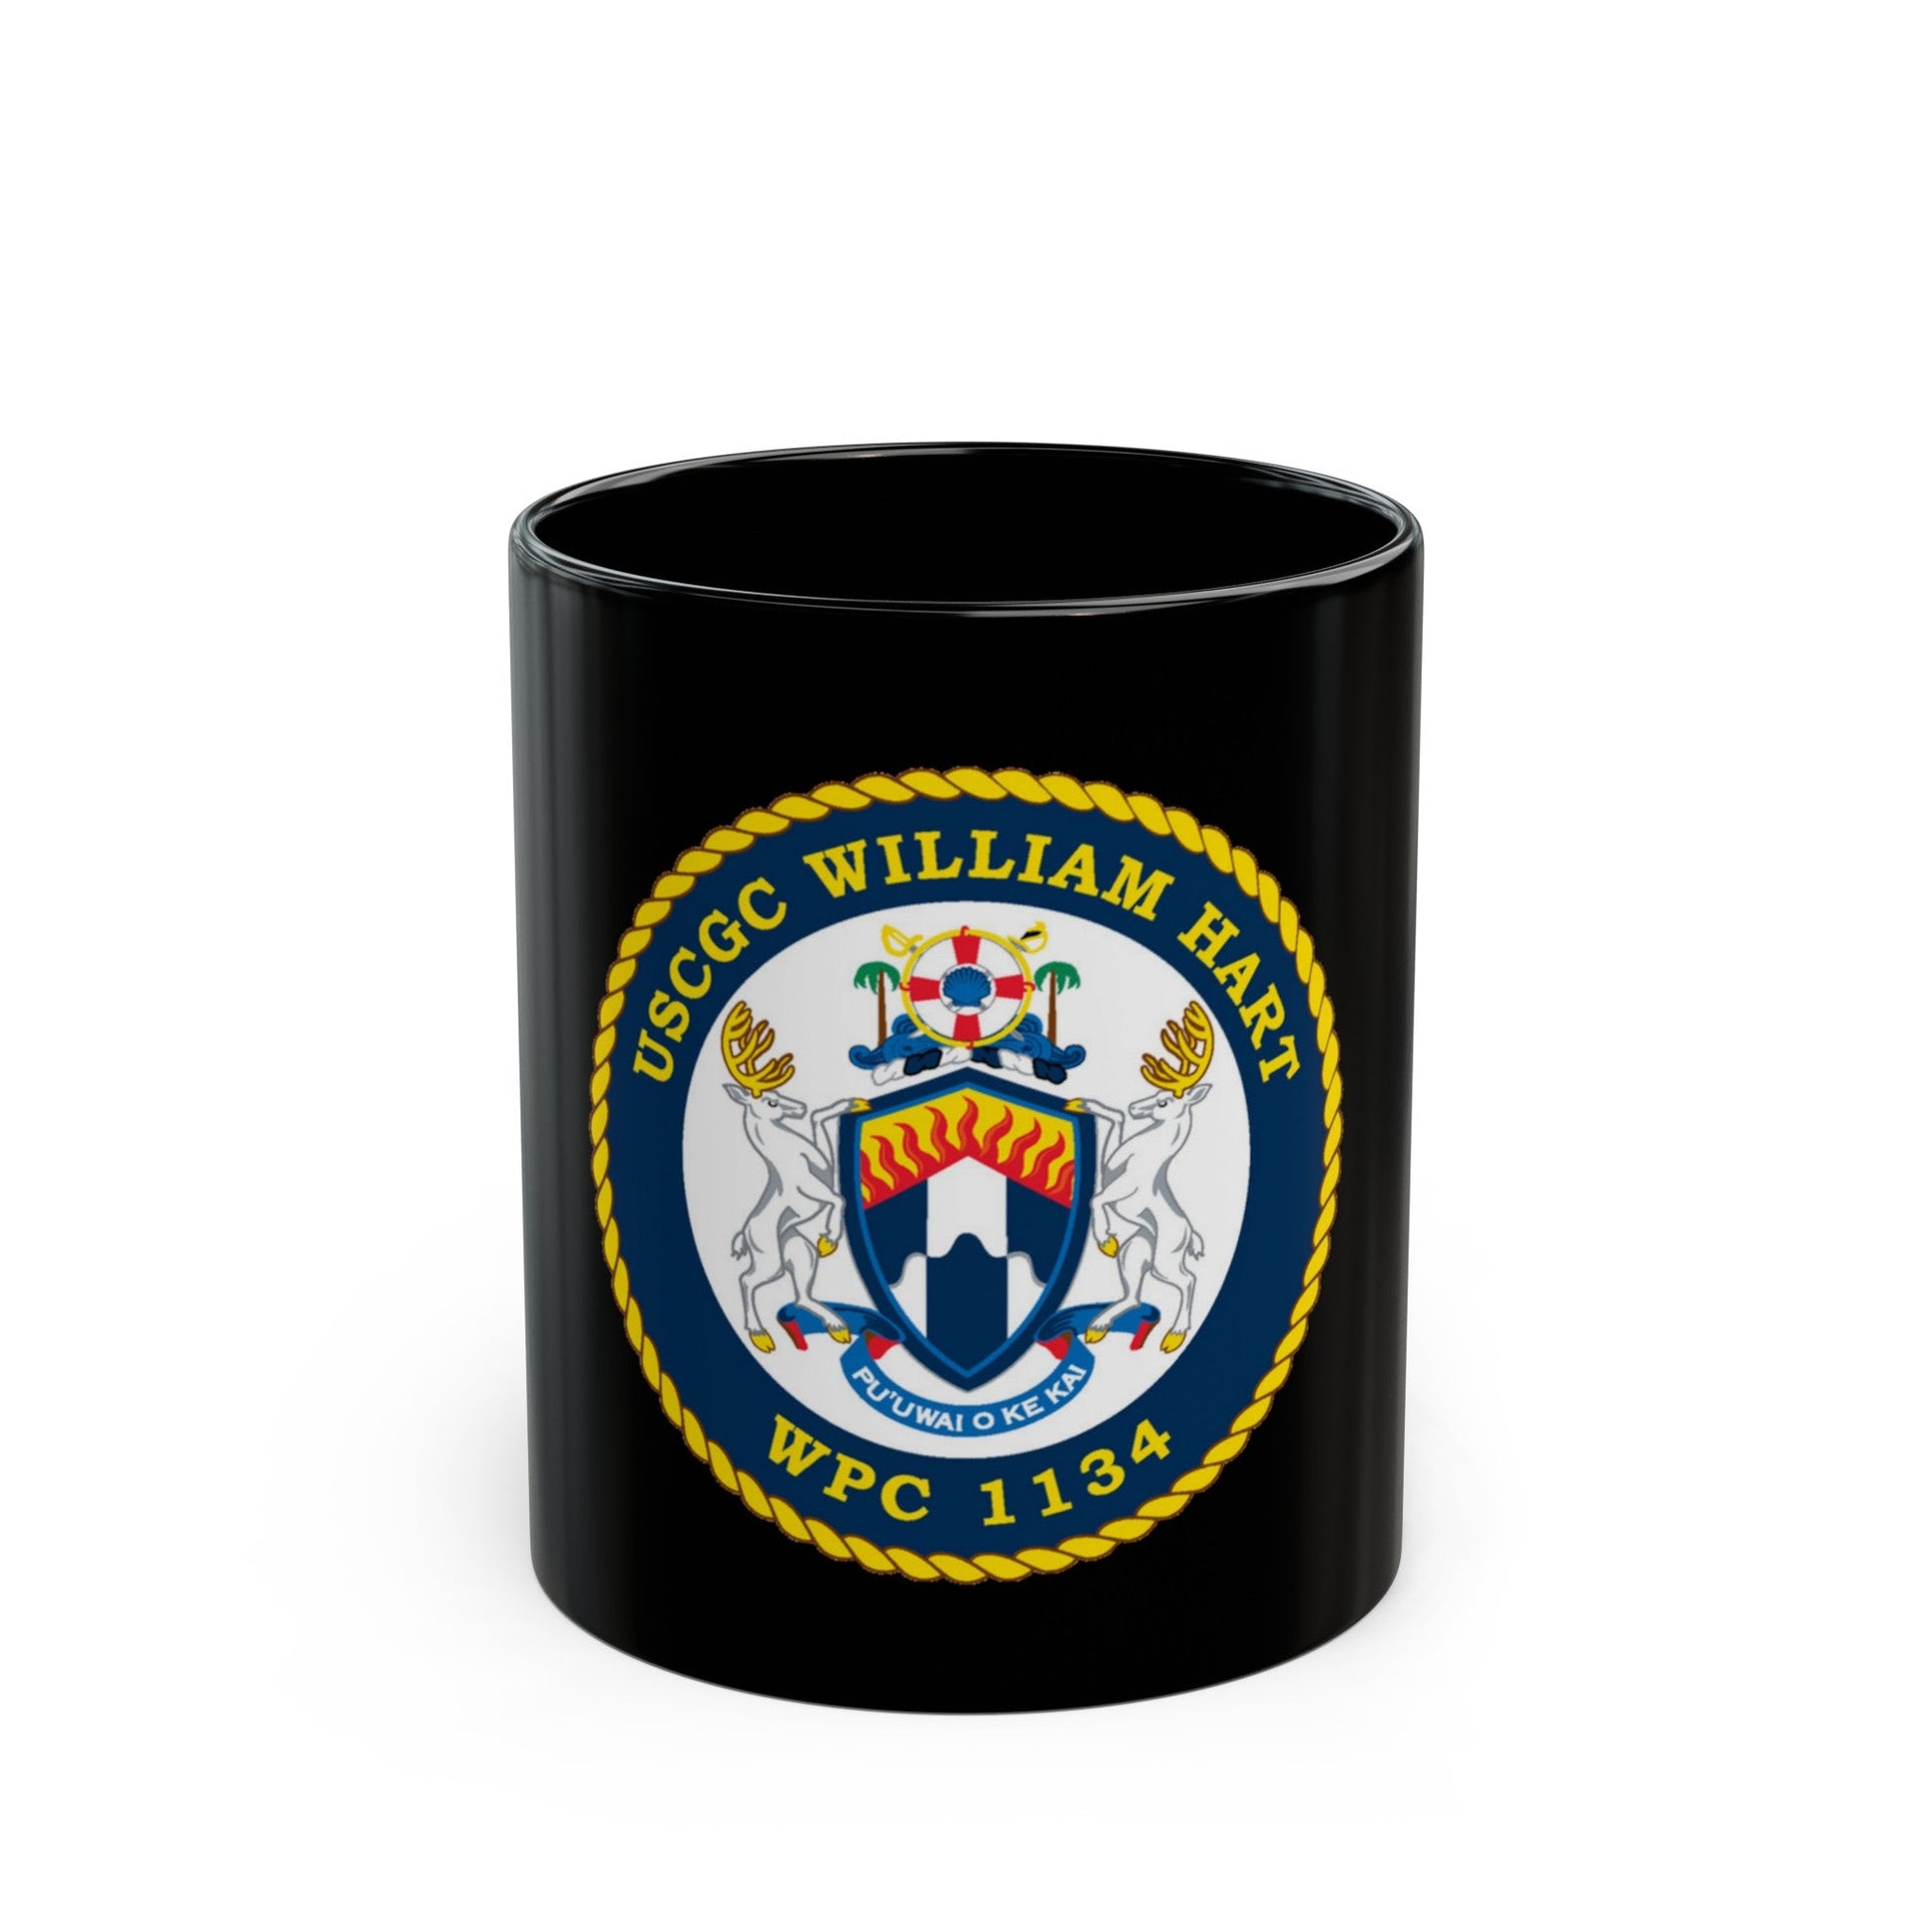 USCG C William Hart WPC 1134 (U.S. Coast Guard) Black Coffee Mug-11oz-The Sticker Space